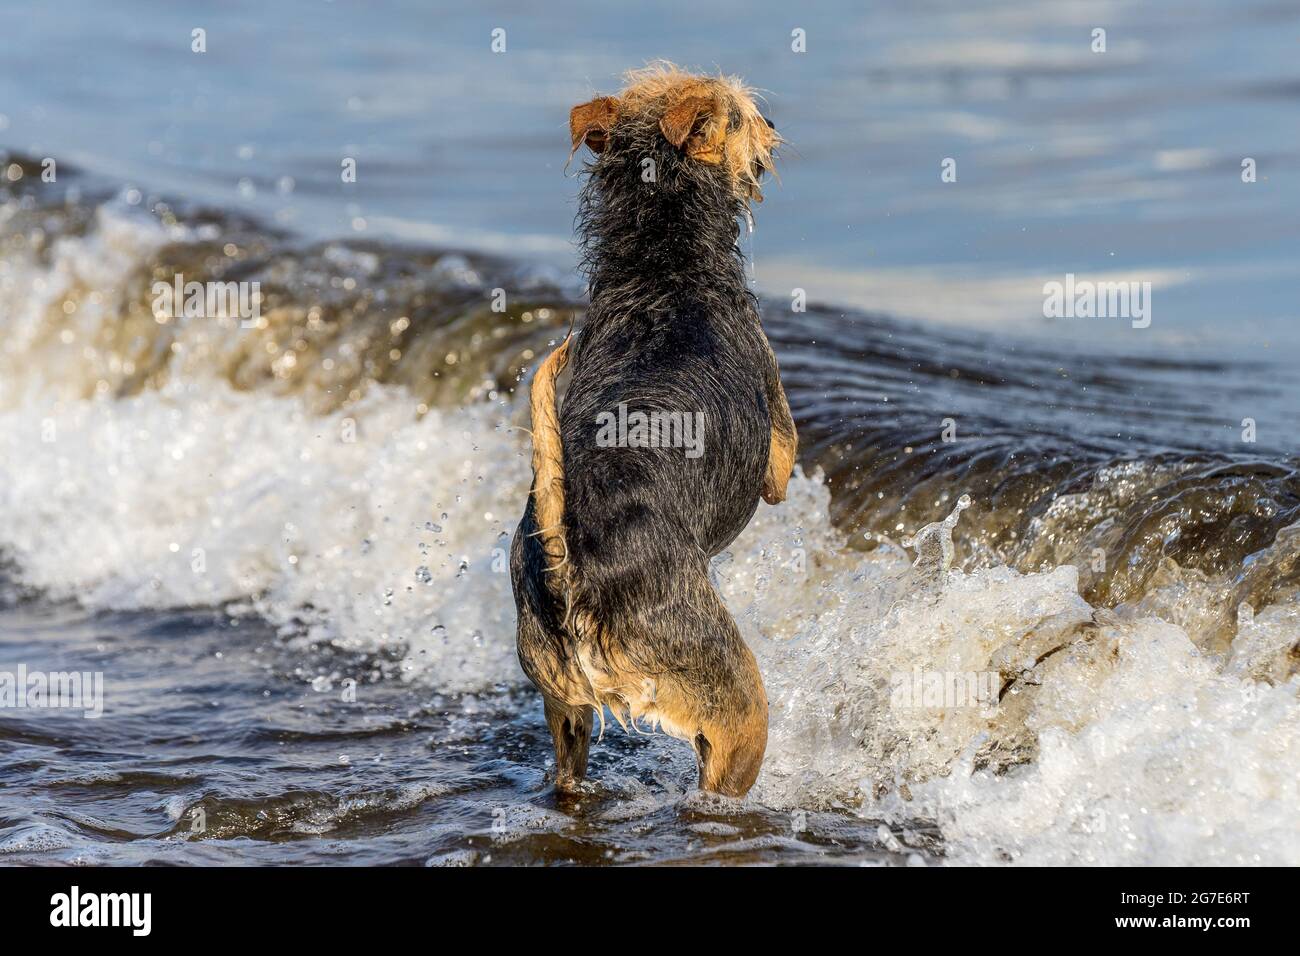 Hund springt in die Wellen Banque D'Images